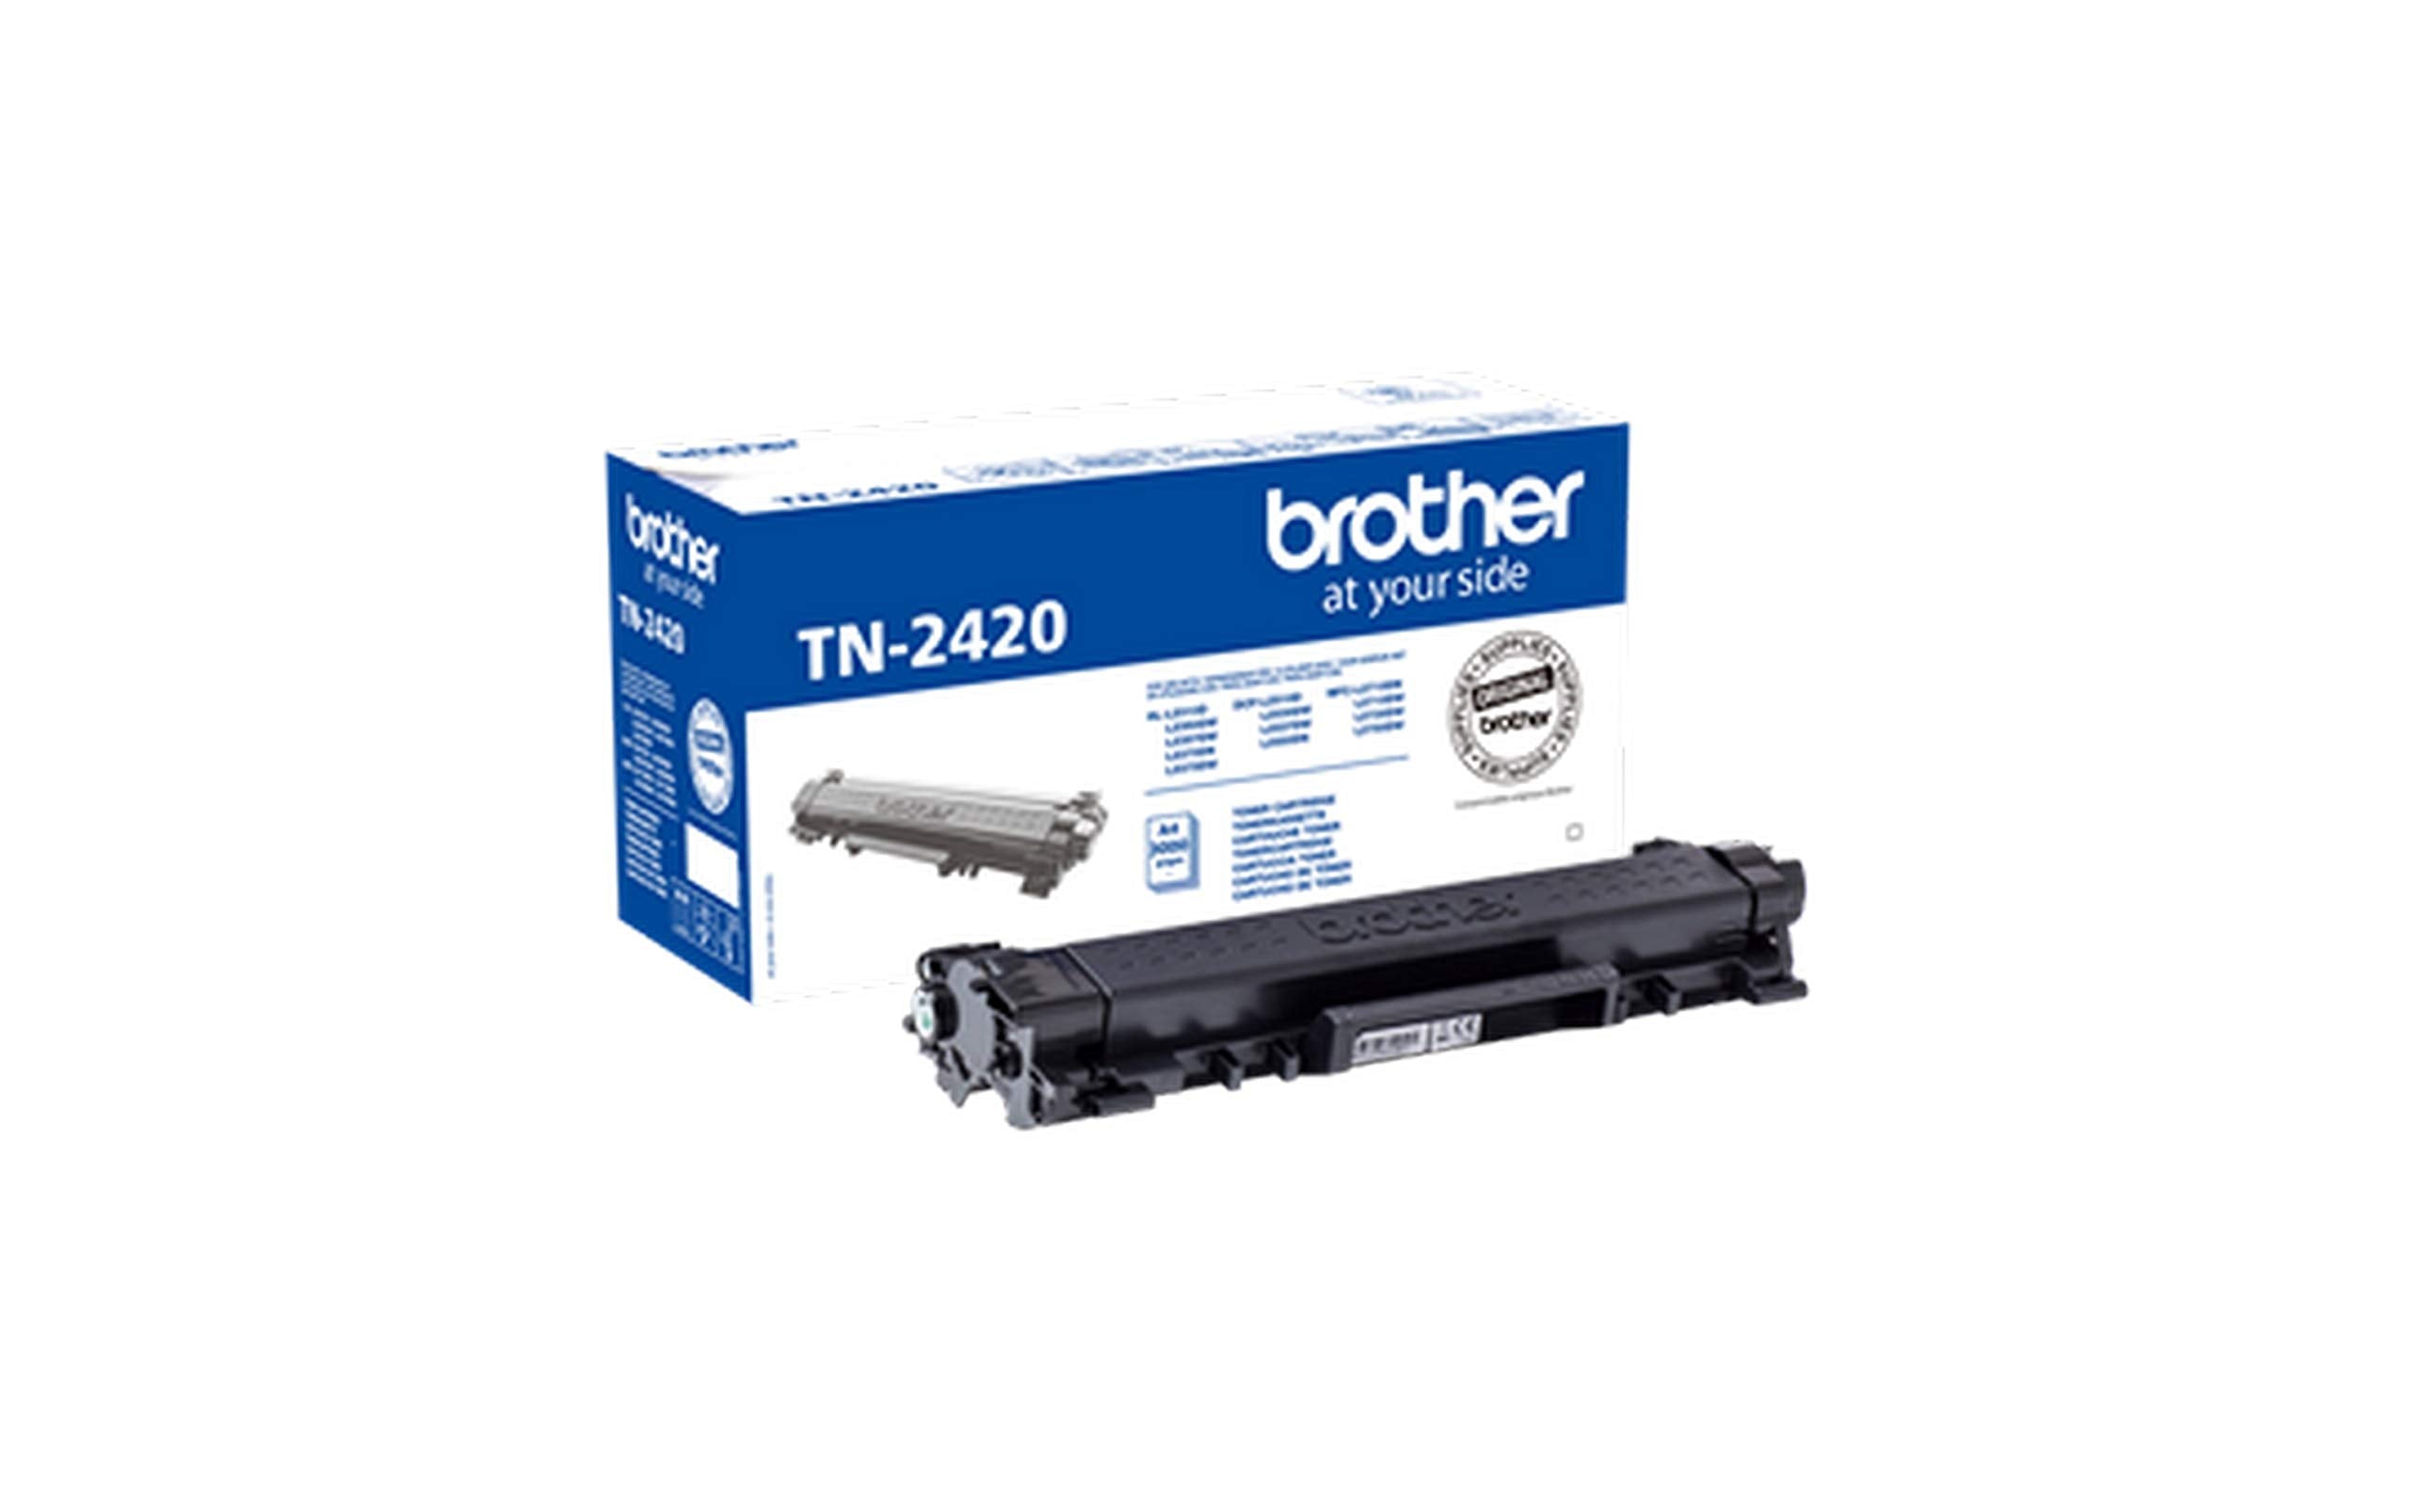 Brother DCPL2510D Impresora Multifunción Láser Monocromo Dúplex, USB, gris